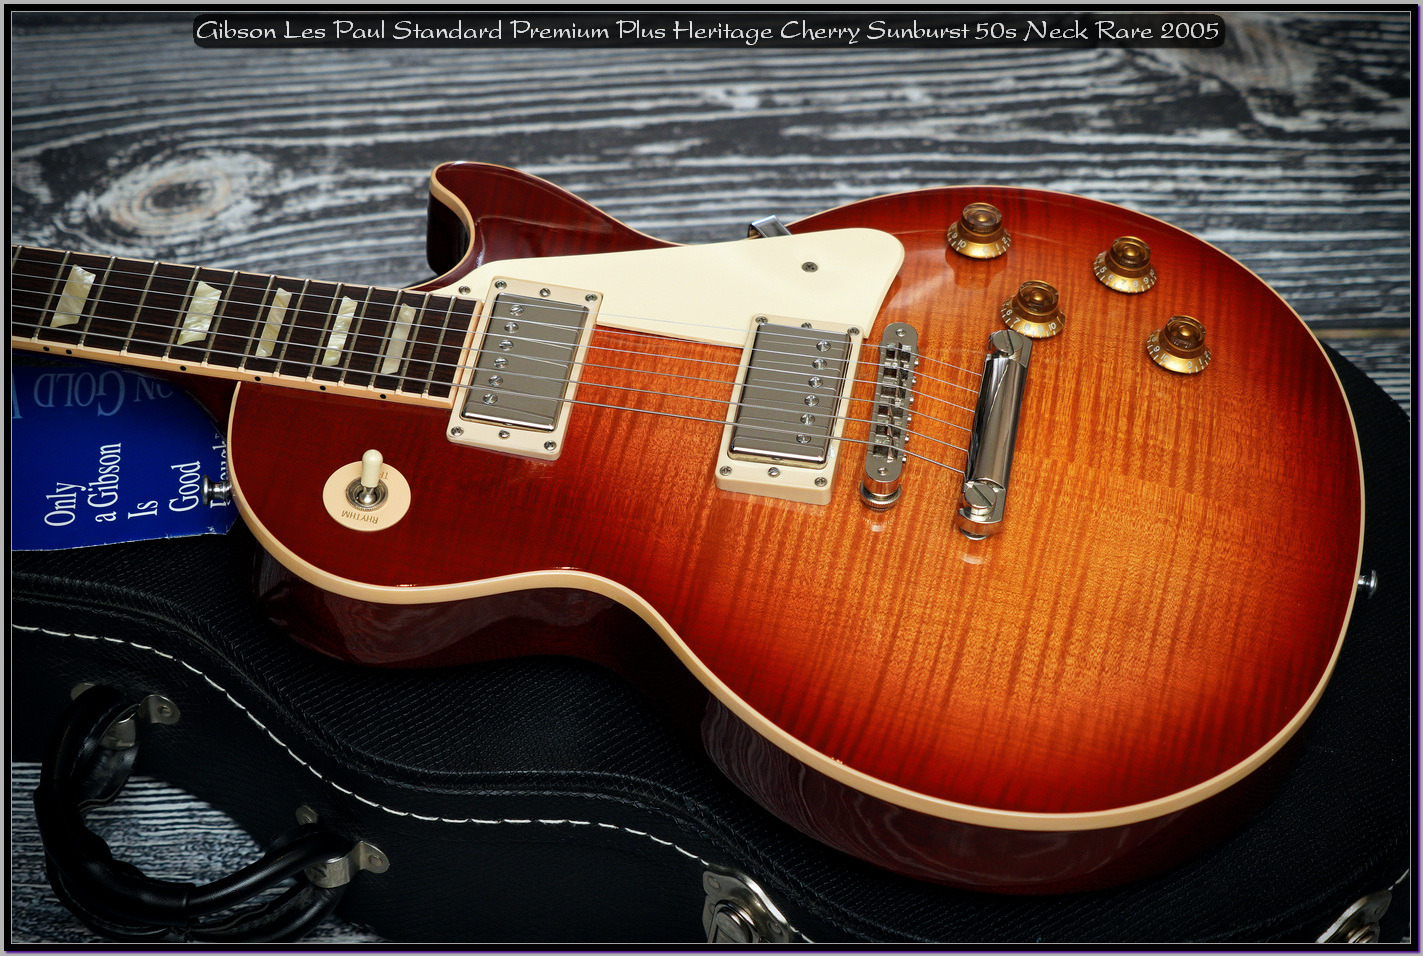 Gibson Les Paul Standard Premium Plus Heritage Cherry Sunburst 50s Neck Rare 2005 03a_x1440.jpg